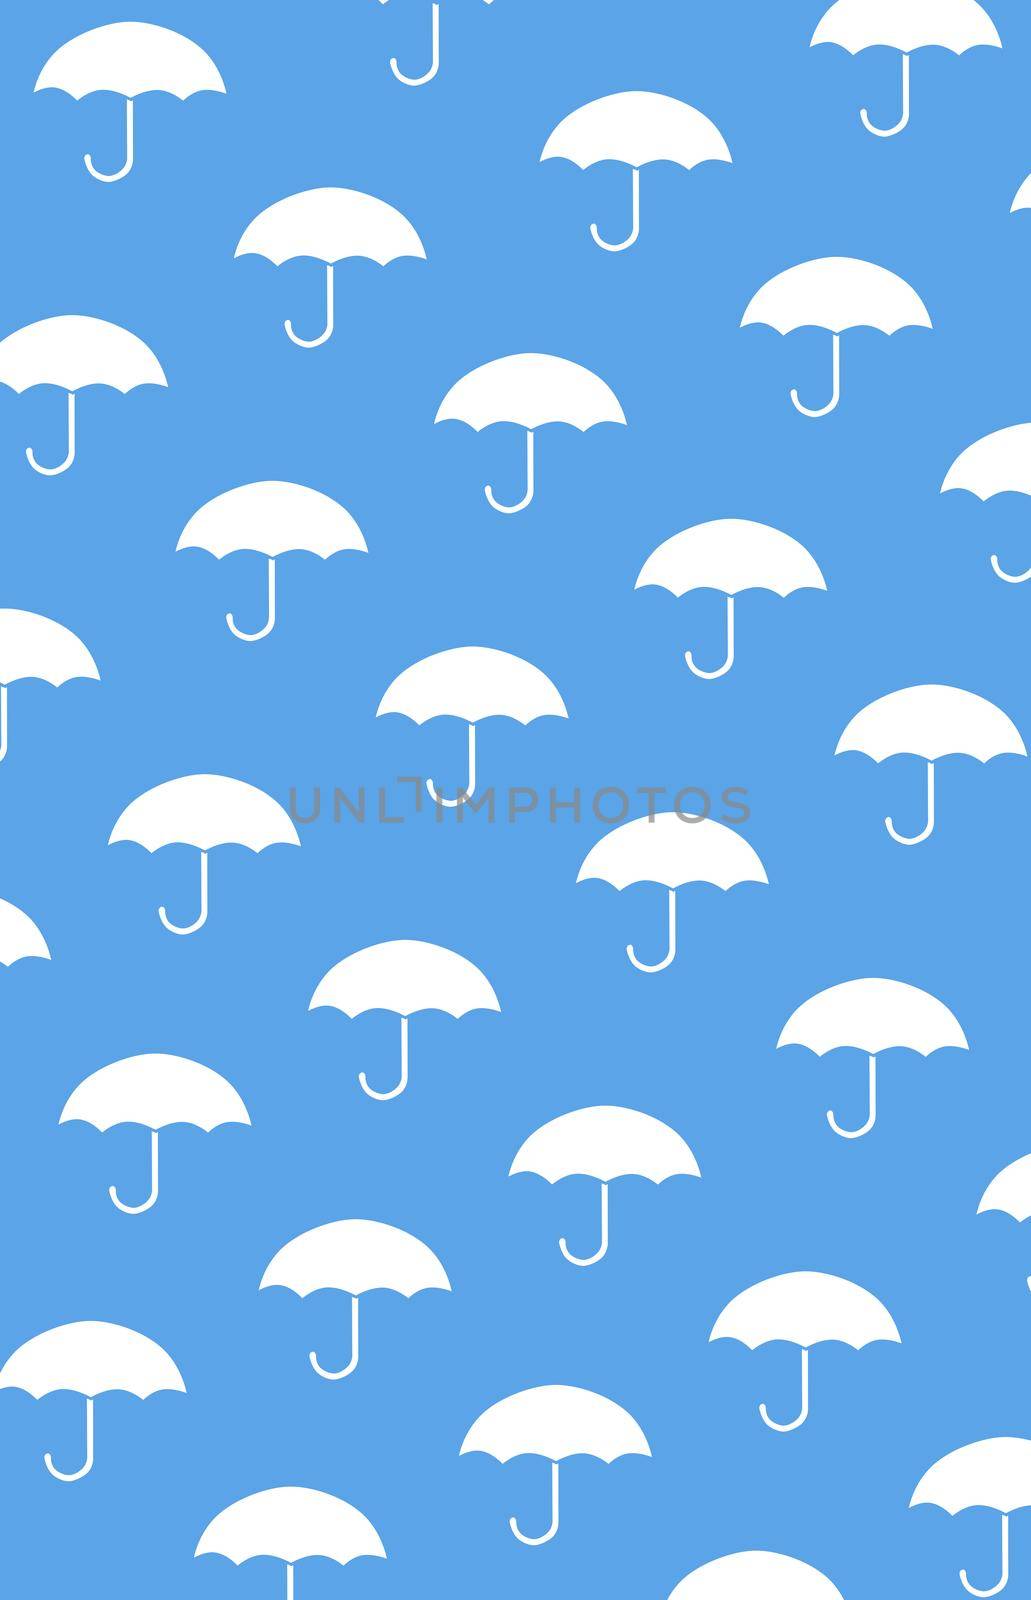 umbrella pattern. White umbrellas on a blue background by nazarovsergey